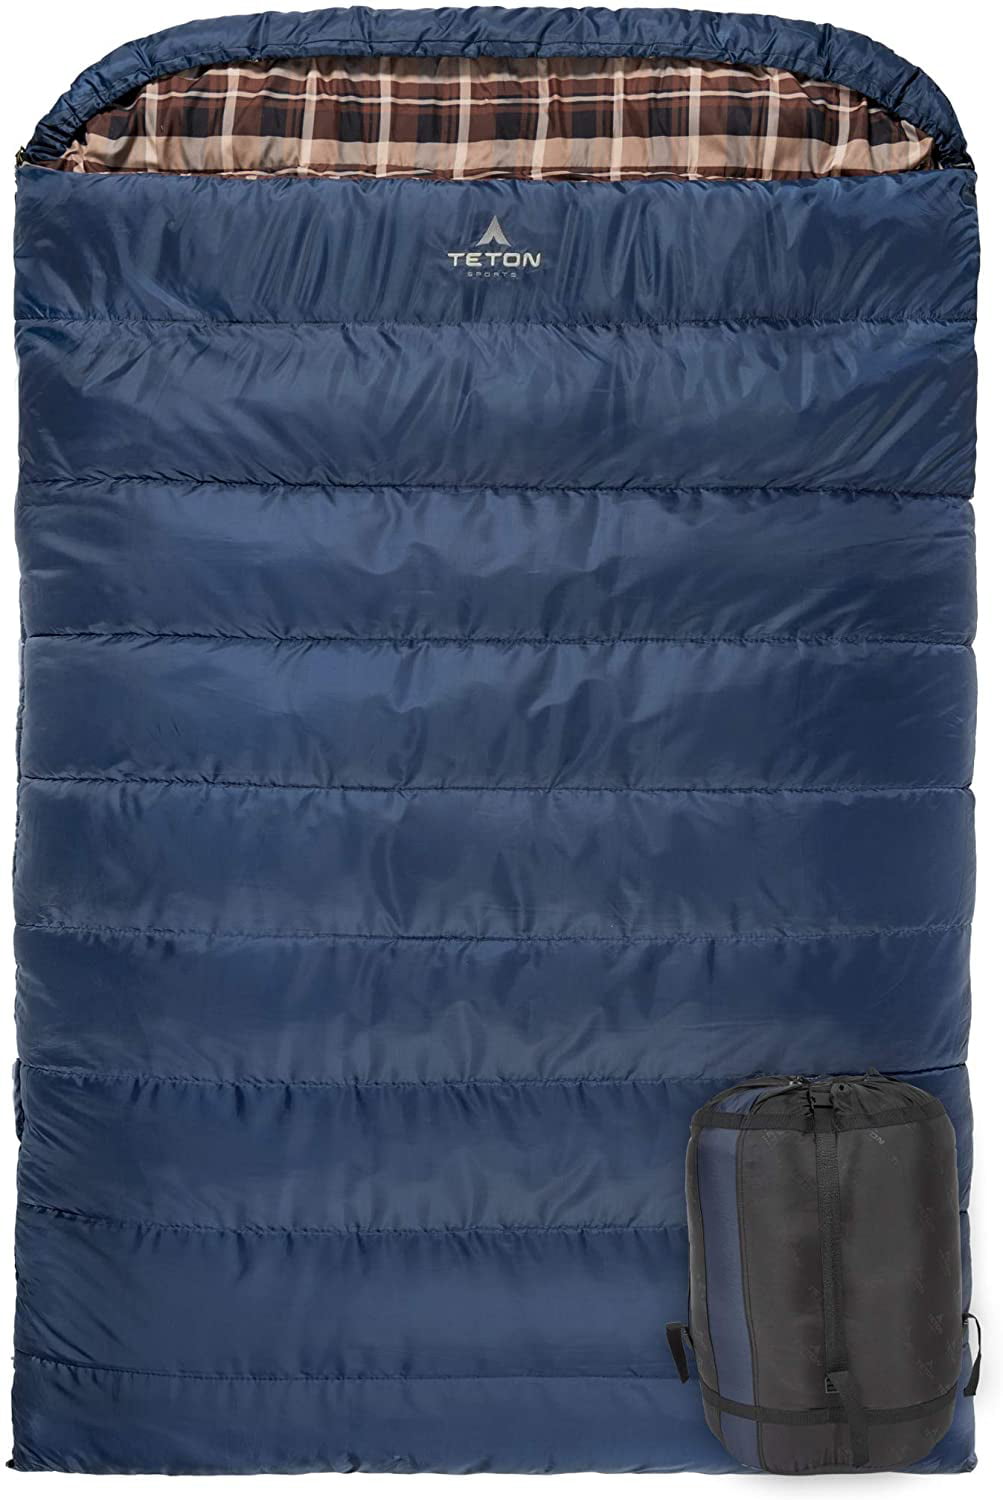 4 season 14 degree DOUBLE sleeping bag 2 in 1 bag waterproof comfortable warm